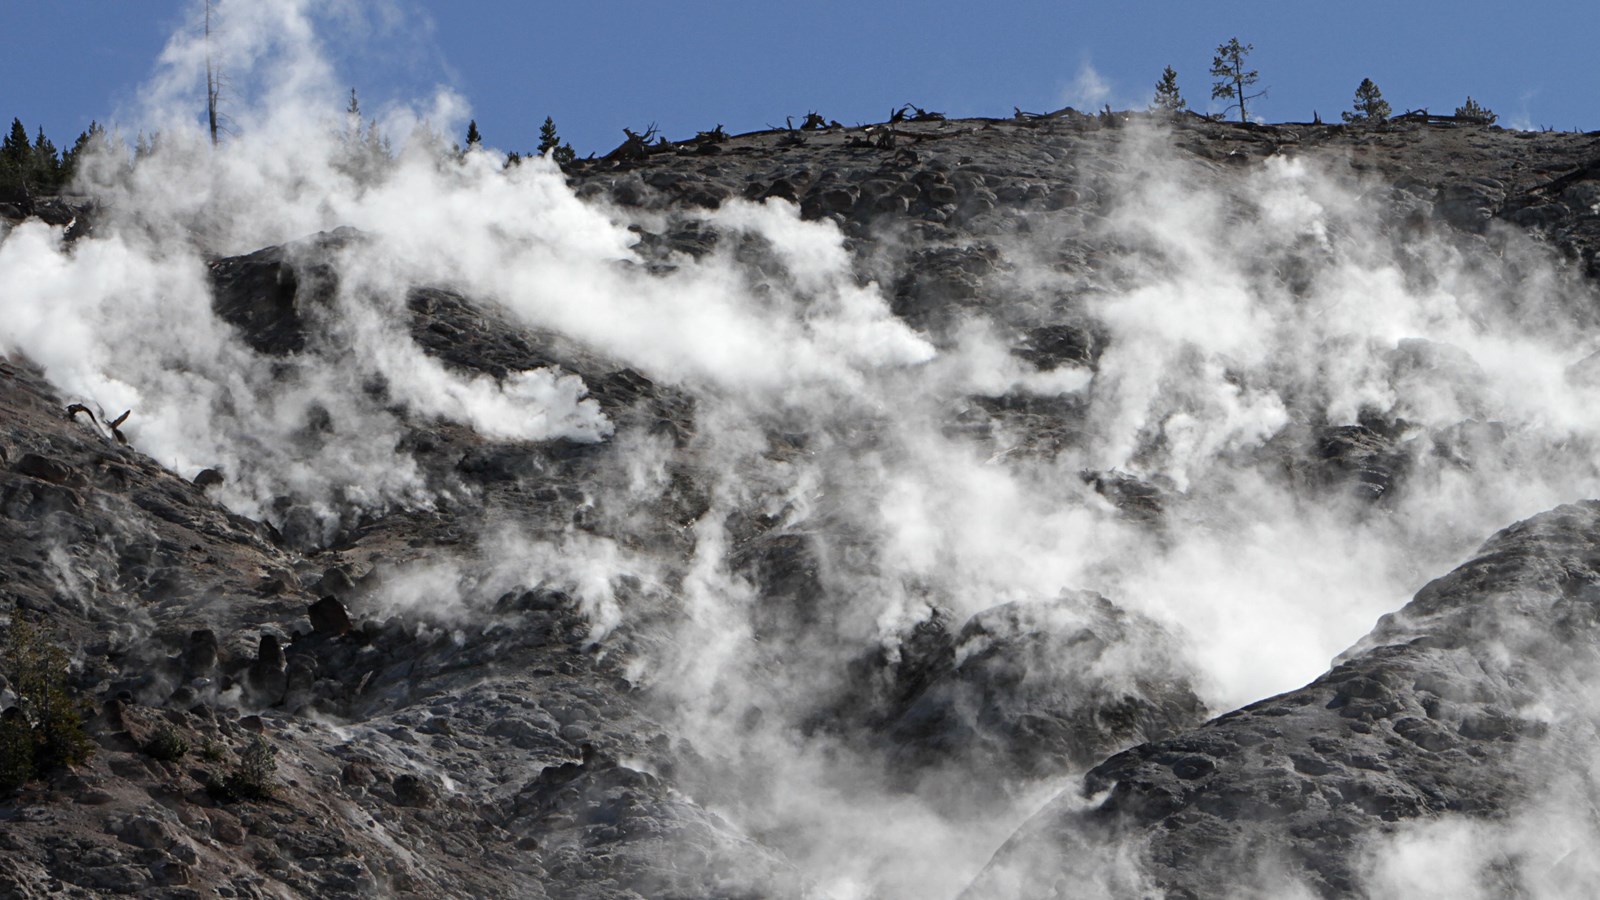 Steam rises from a steep, barren mountainside.